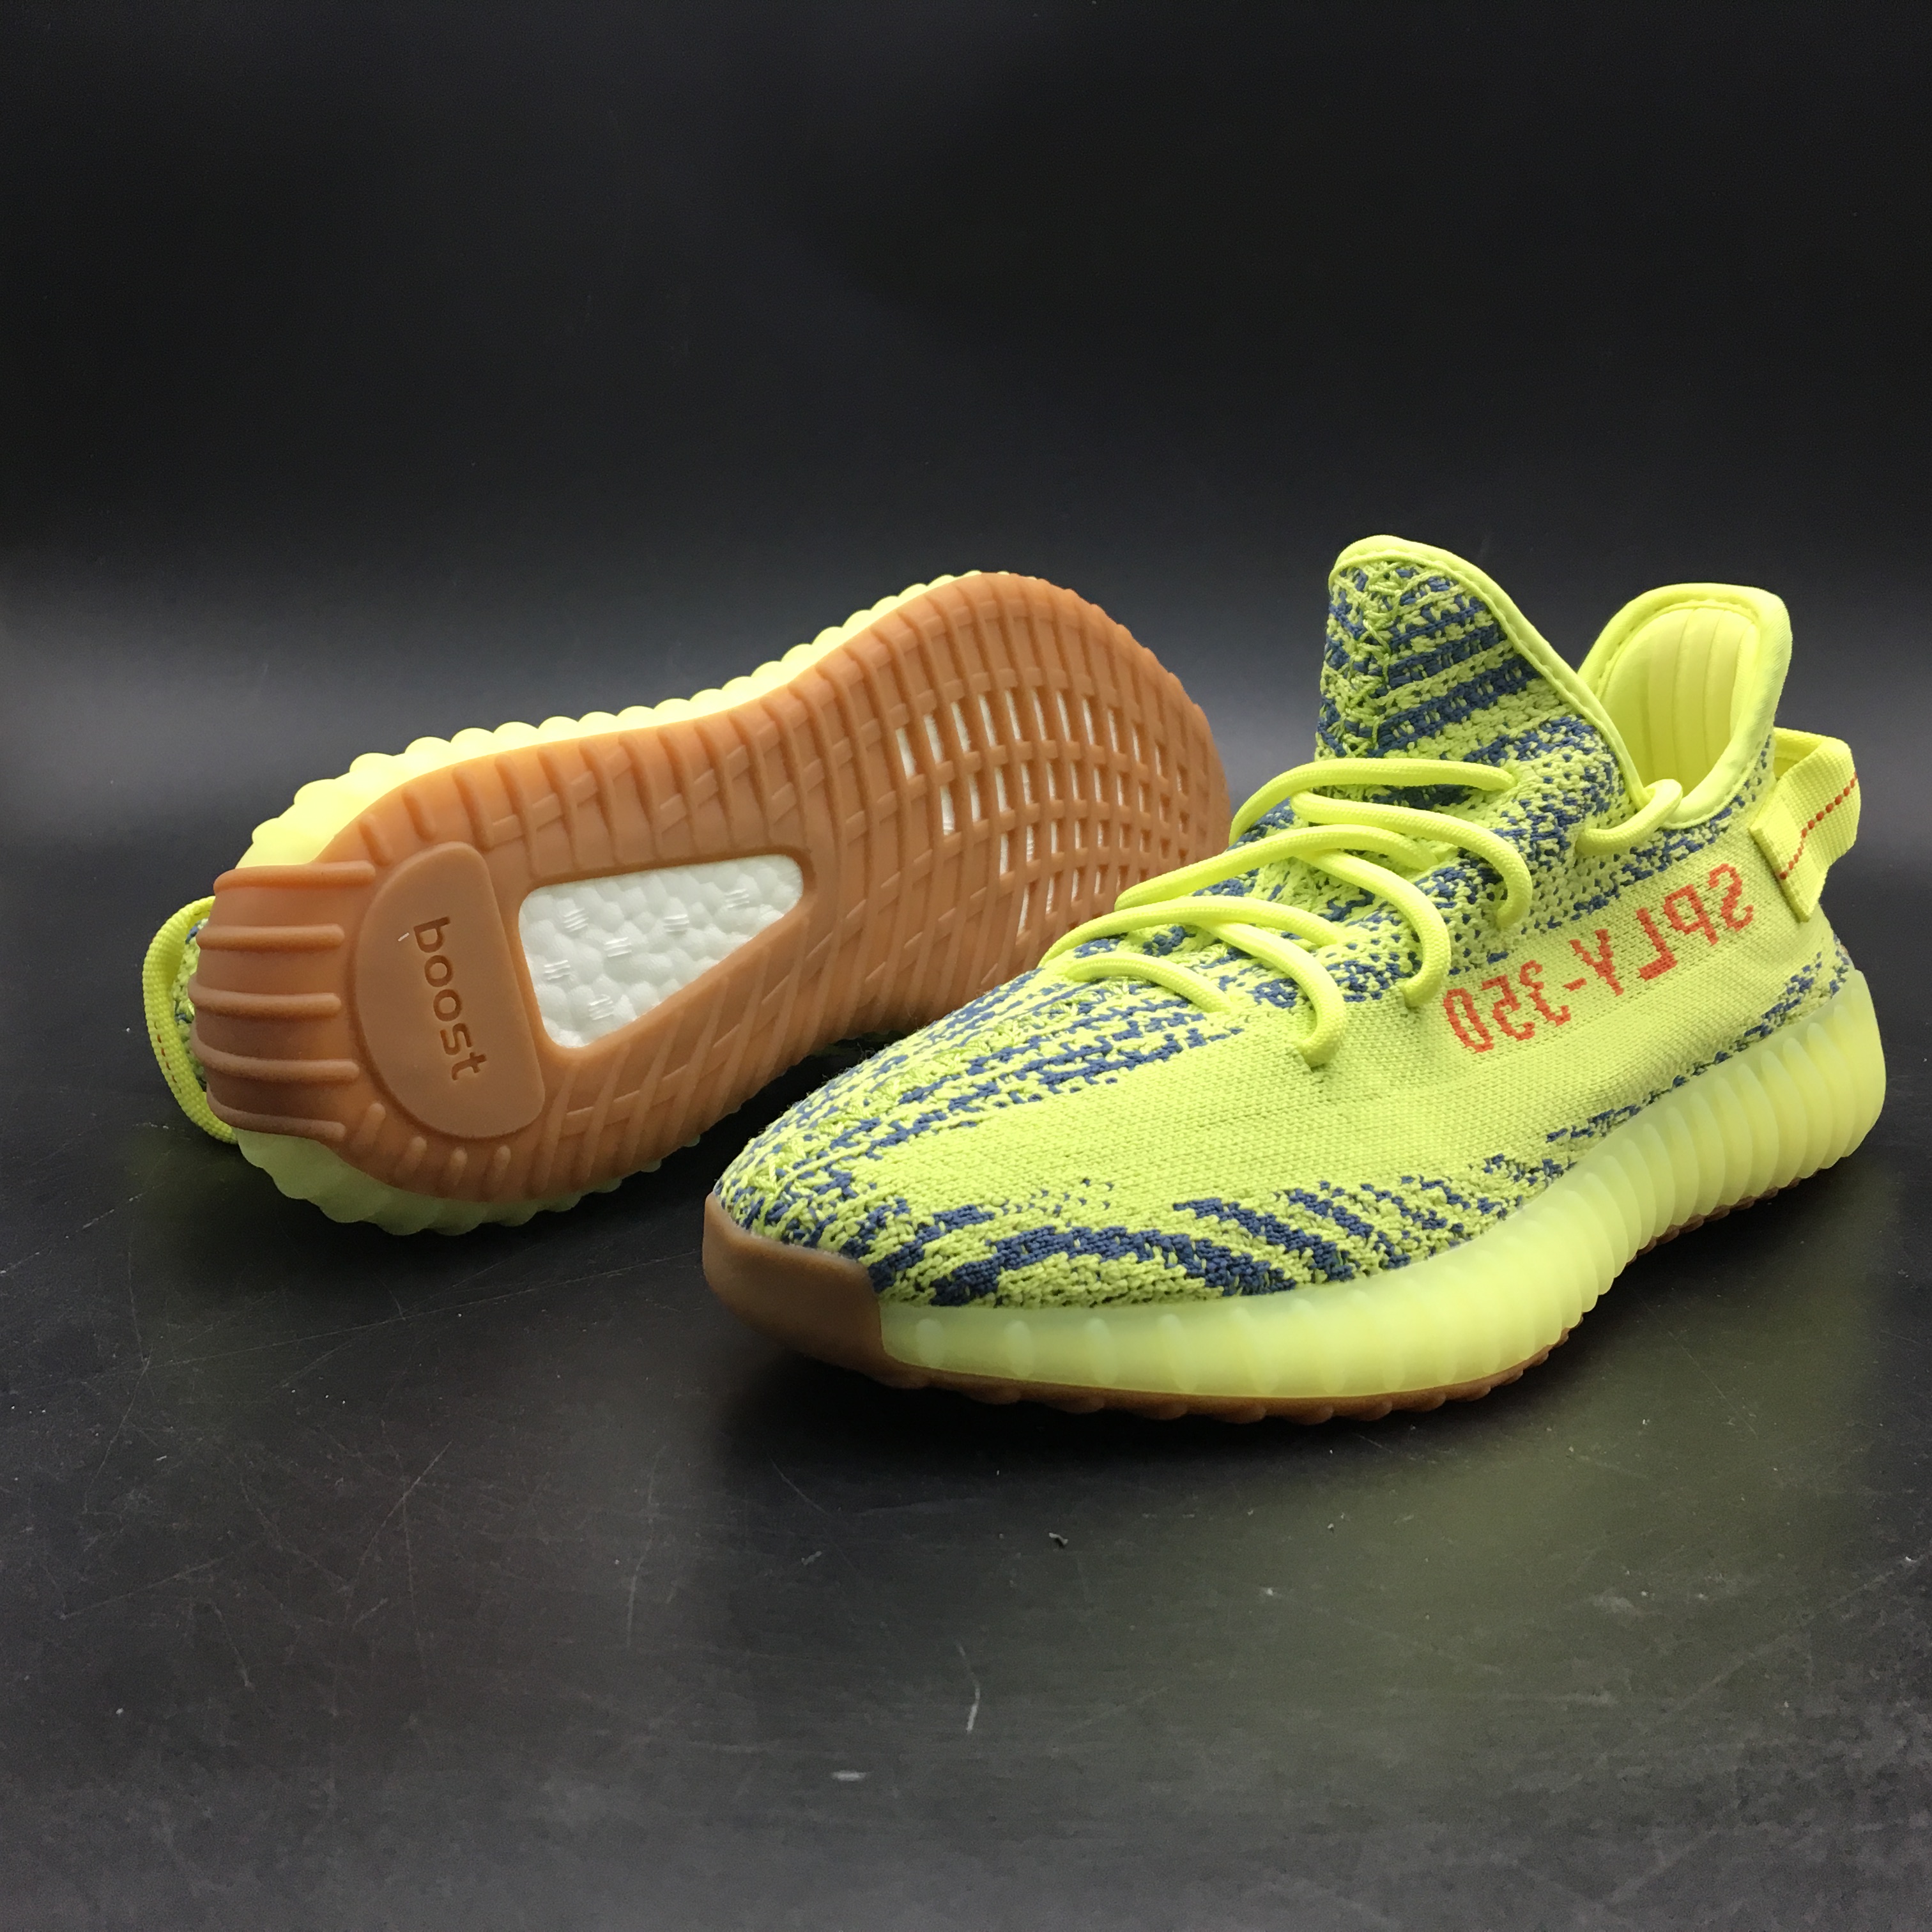 Adidas Originals Yeezy Boost 350 V2 Yebra B37572